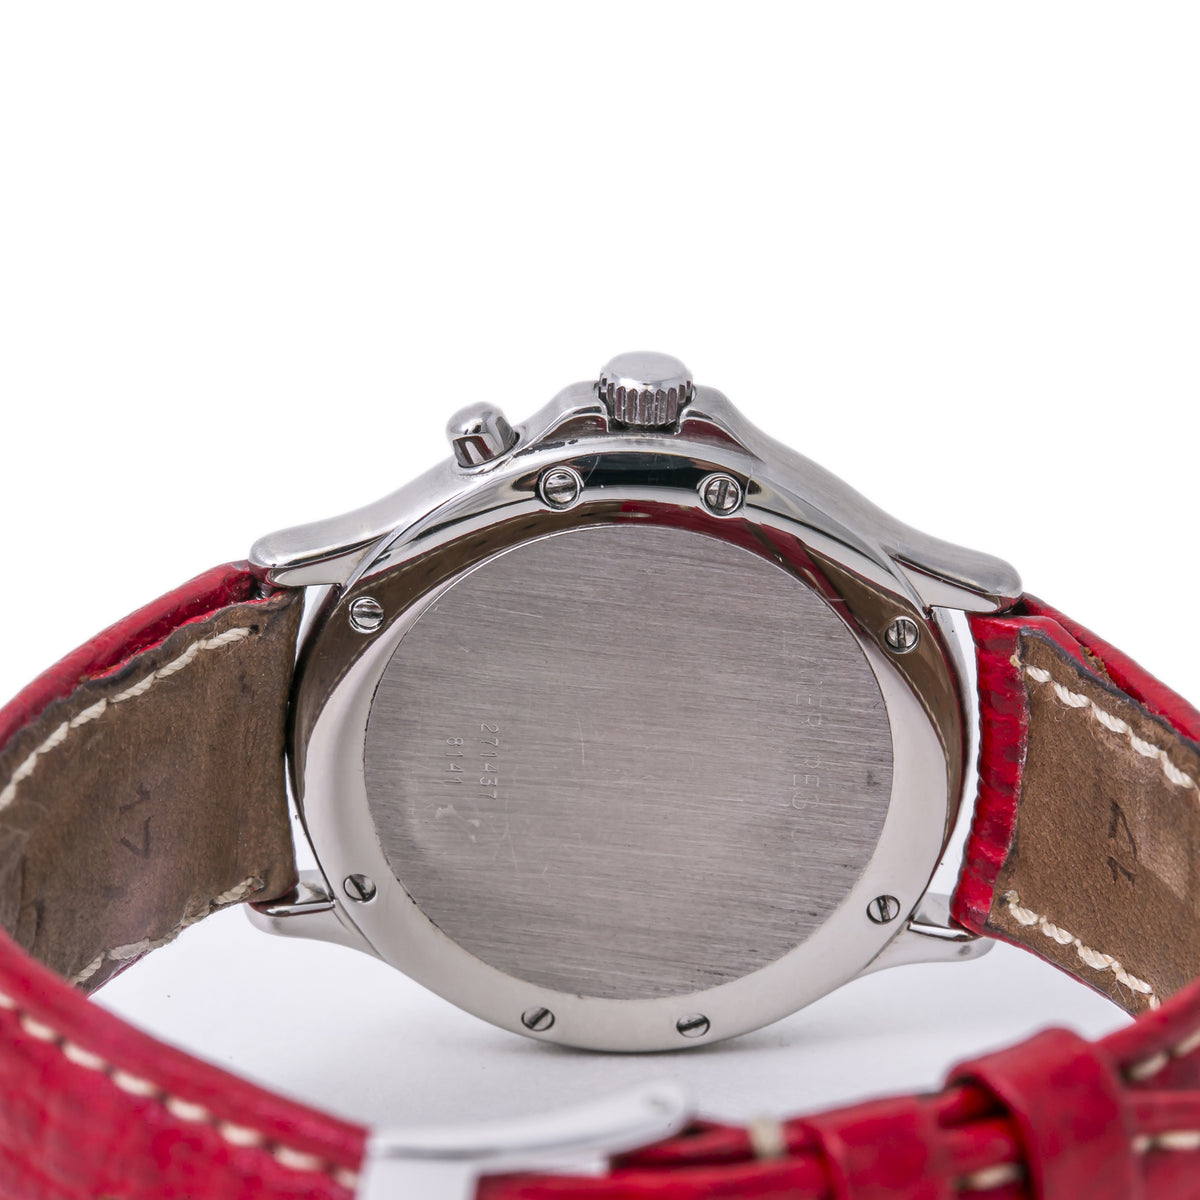 Chopard 1000 Mille Miglia 8141 Monopusher Chronograph Mens Quartz Watch 33mm